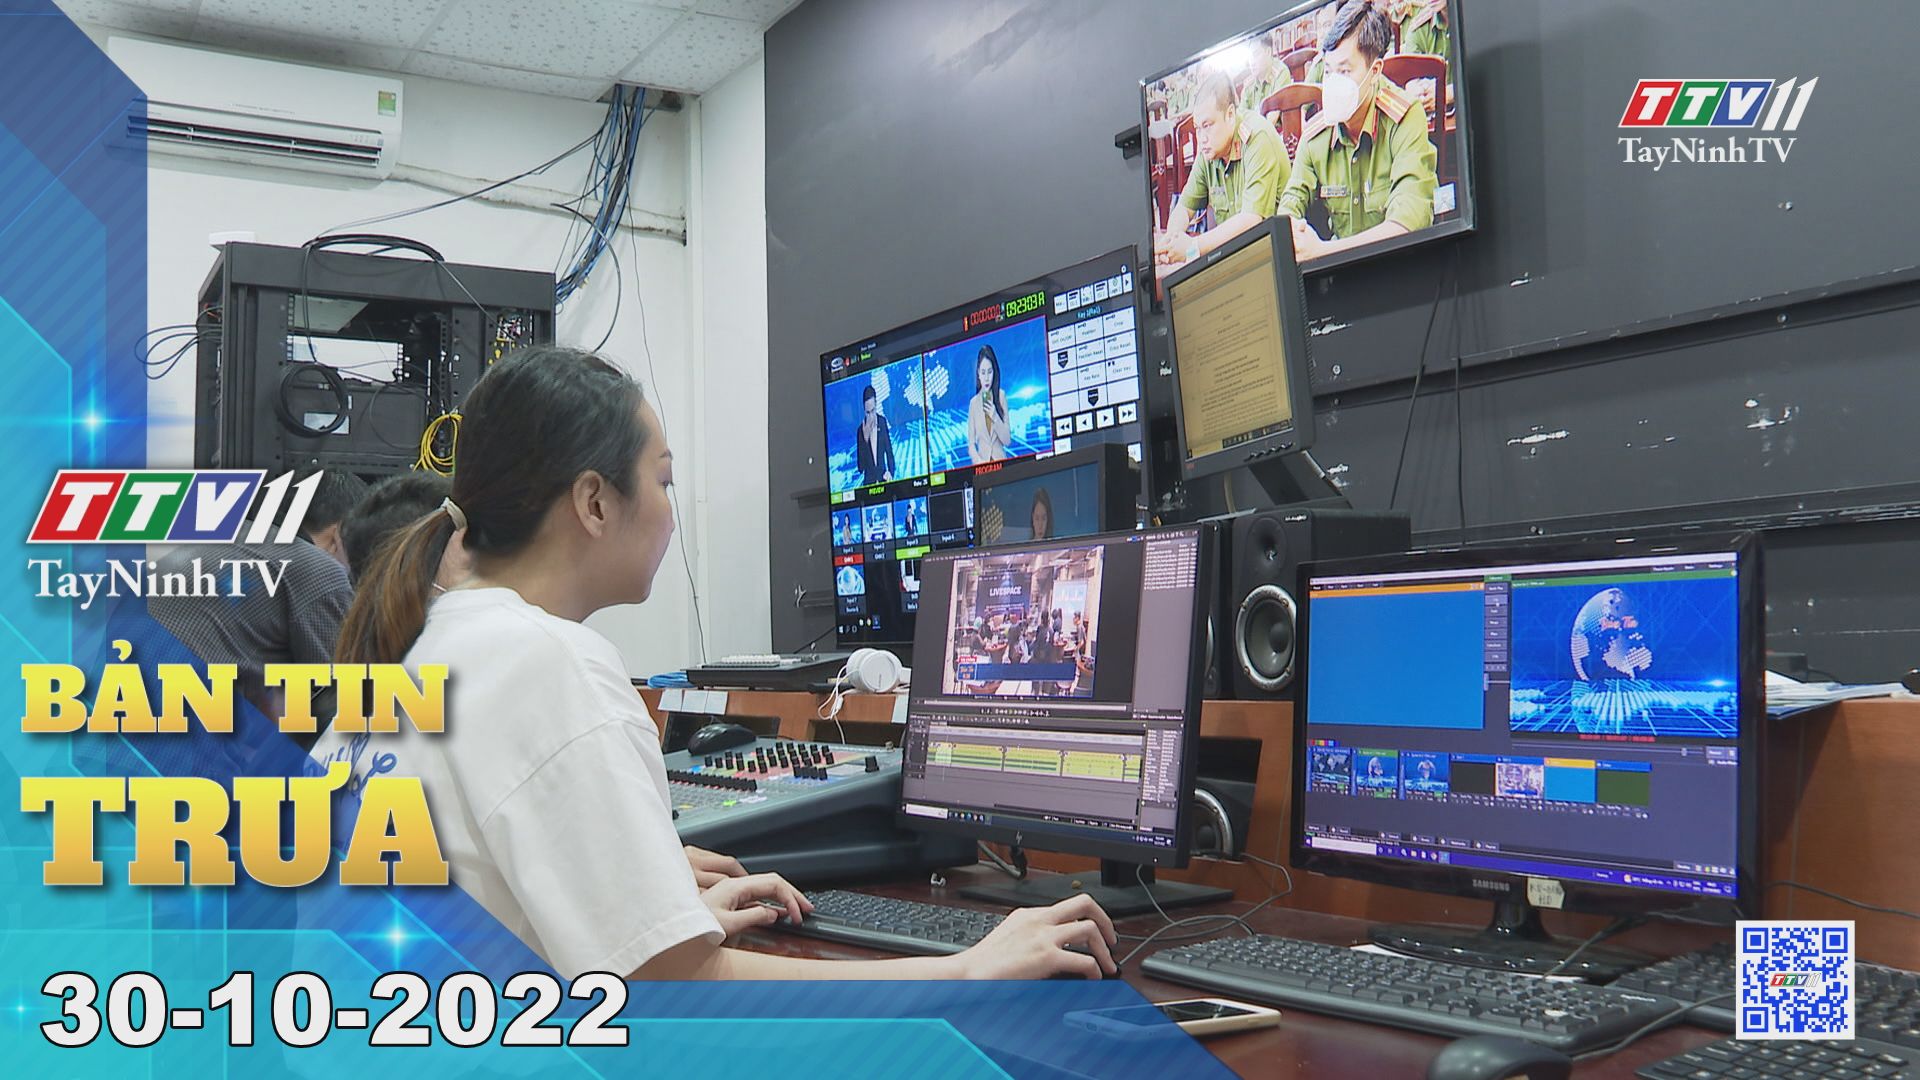 Bản tin trưa 30-10-2022 | Tin tức hôm nay | TayNinhTV